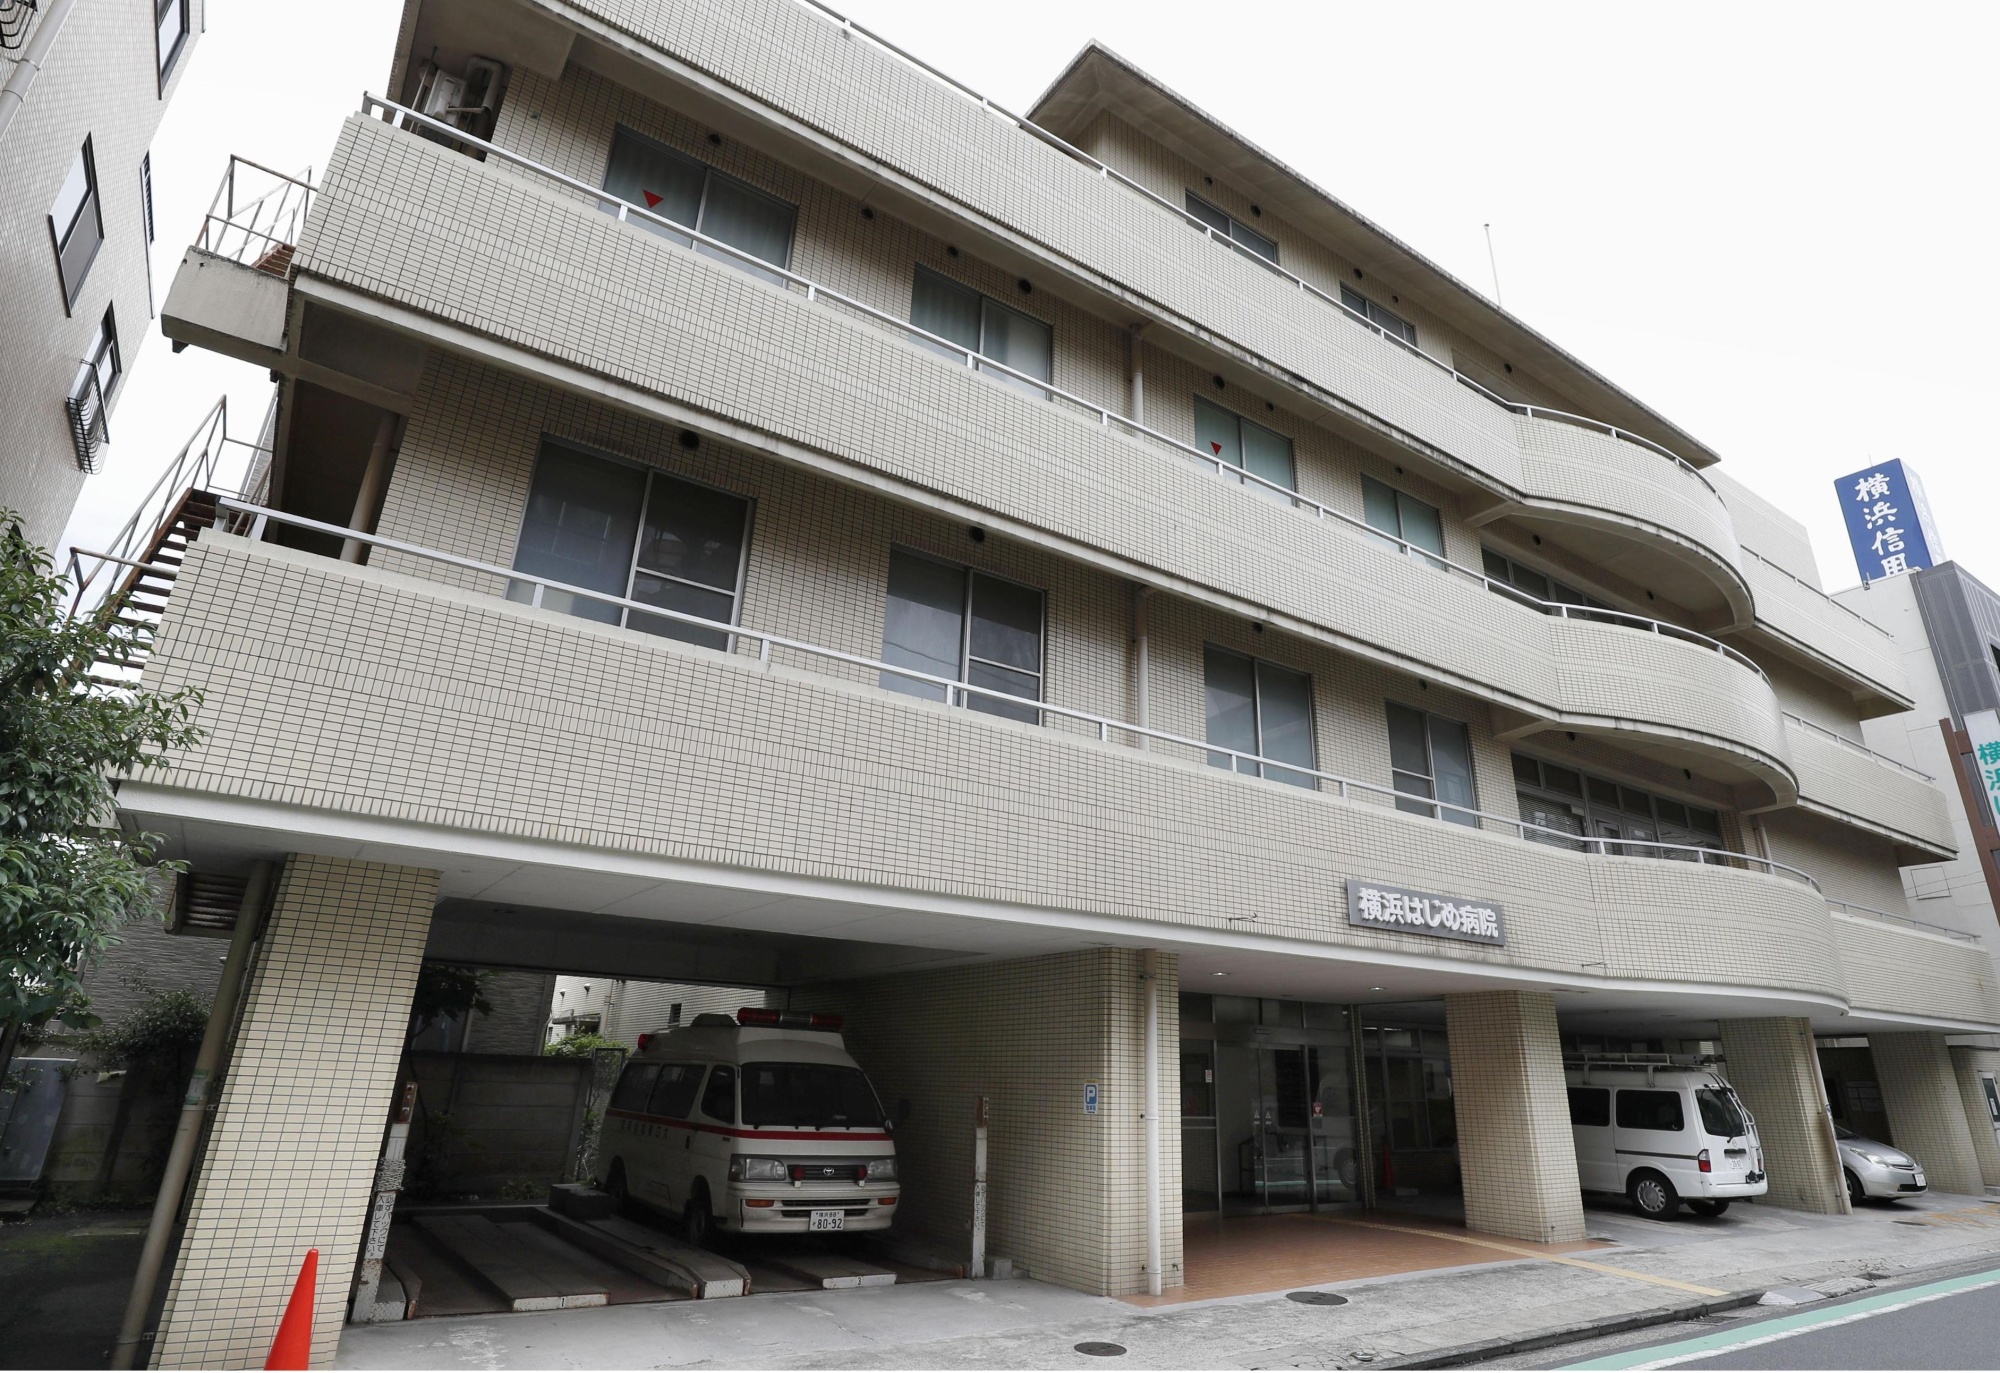 Yokohama Hajime Hospital, located in Kanagawa Ward and formerly known as Oguchi Hospital, is seen in a photo taken Saturday. | KYODO